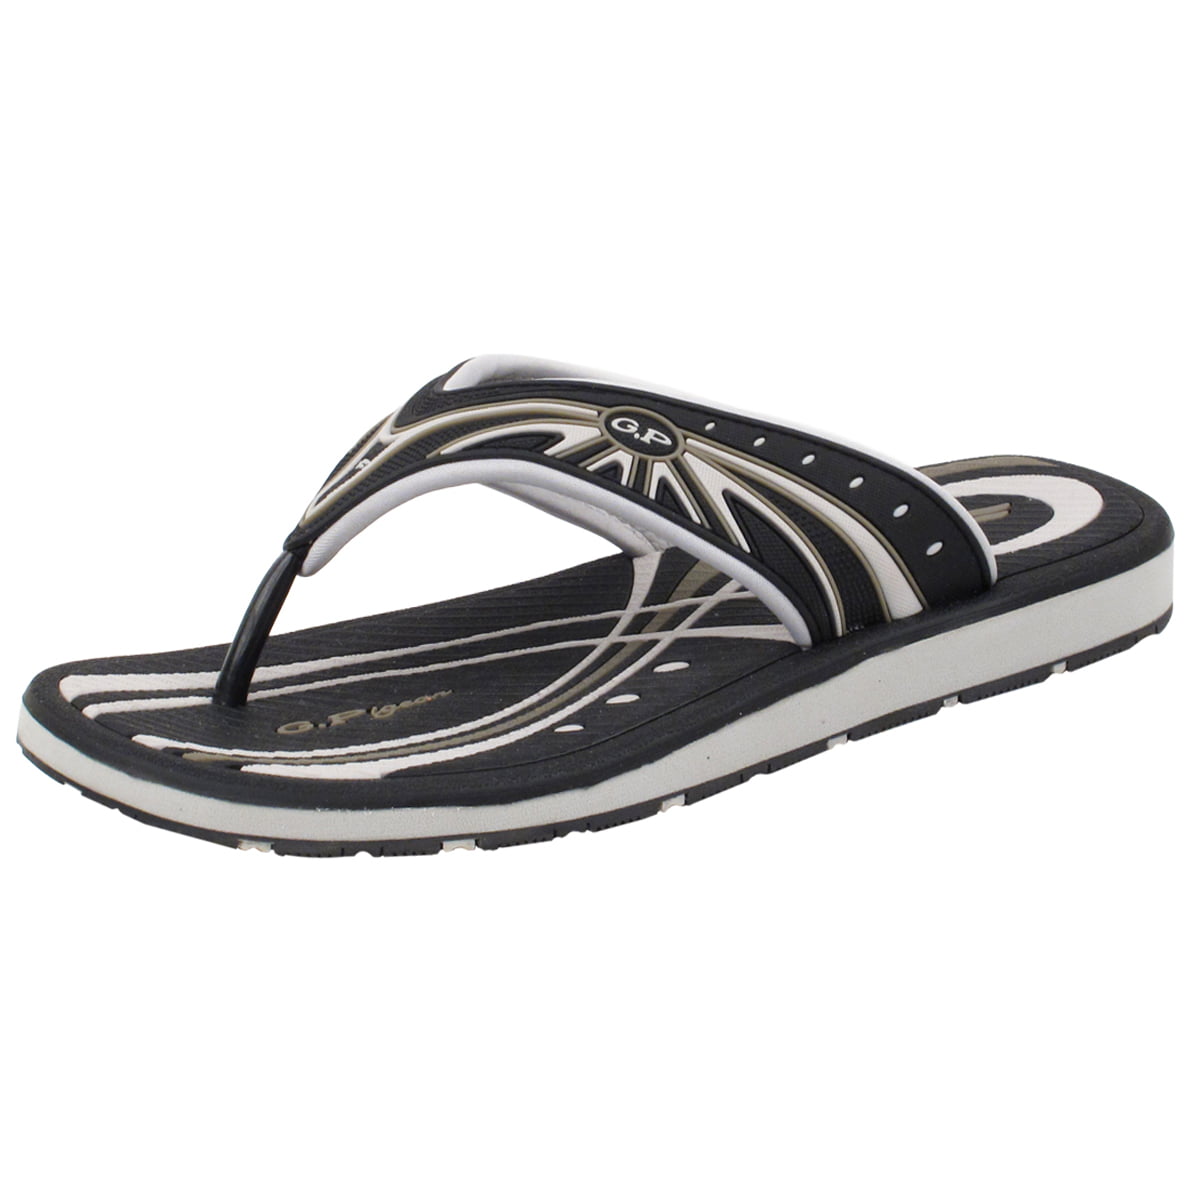 Sandals ECSA Sandals Black With black & White T Strap Straps NEW SZ 10 